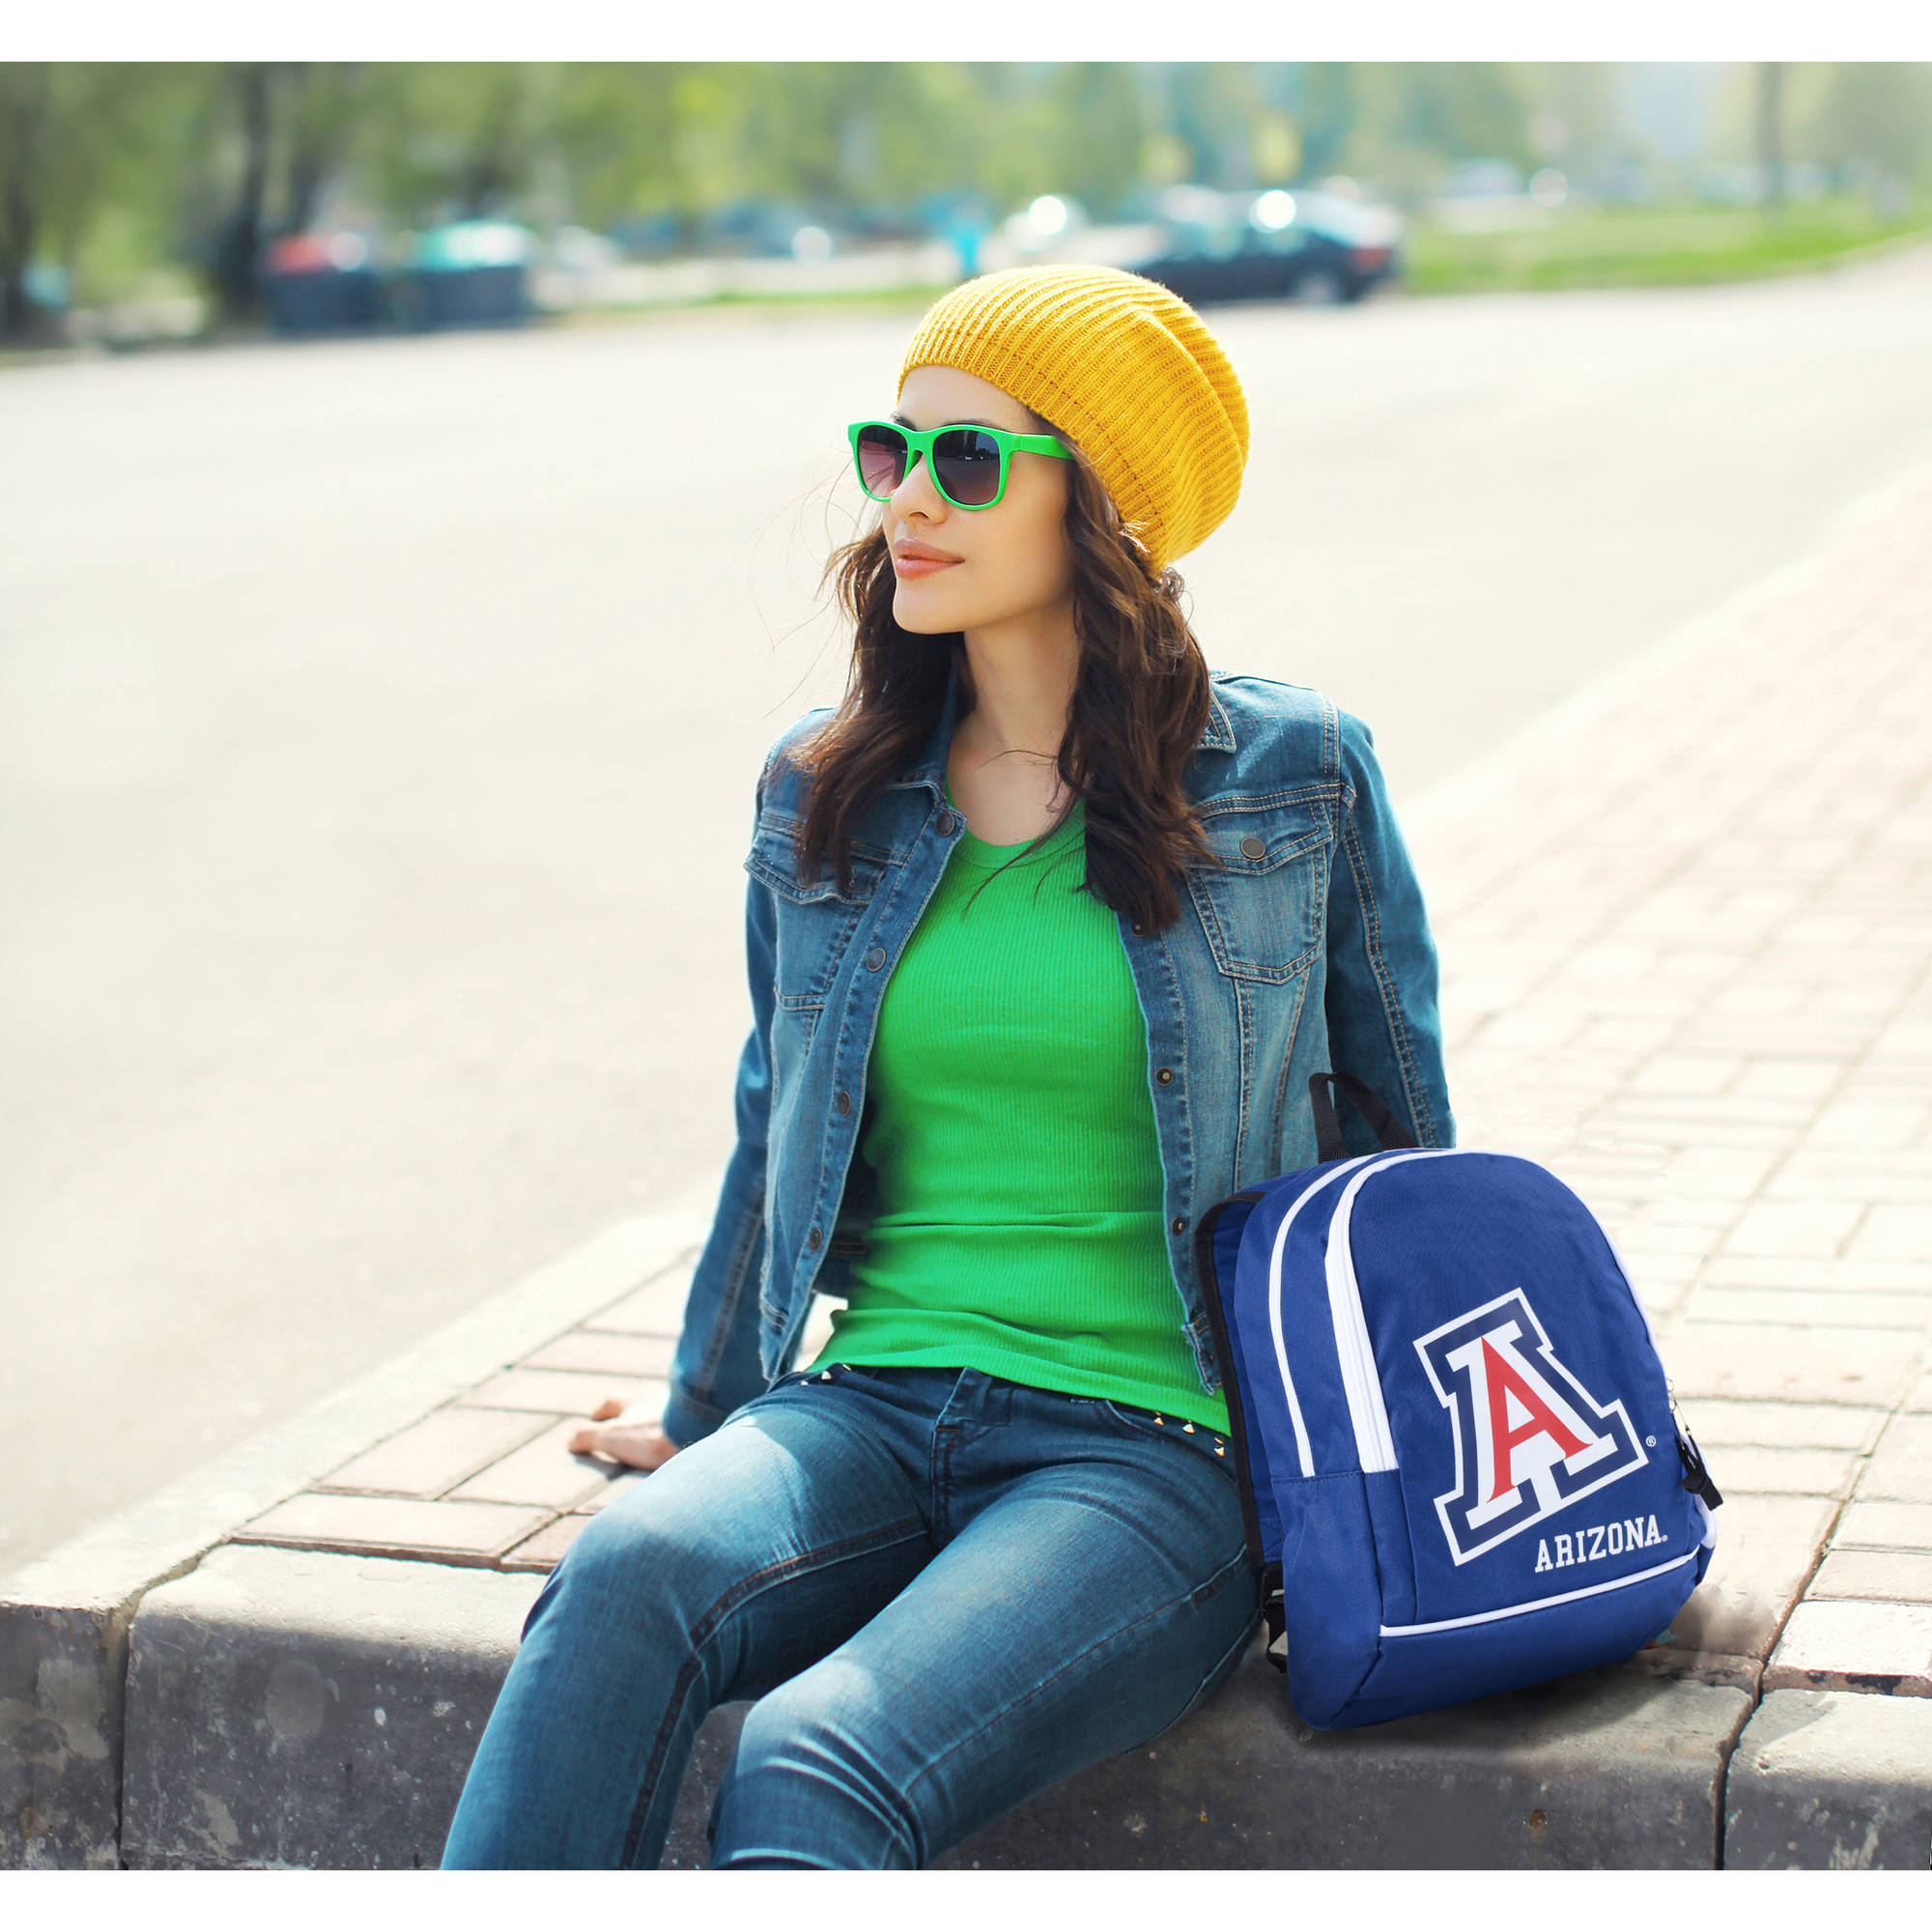 NCAA Arizona Wildcats "Torres" Mini-Backpack - image 2 of 2